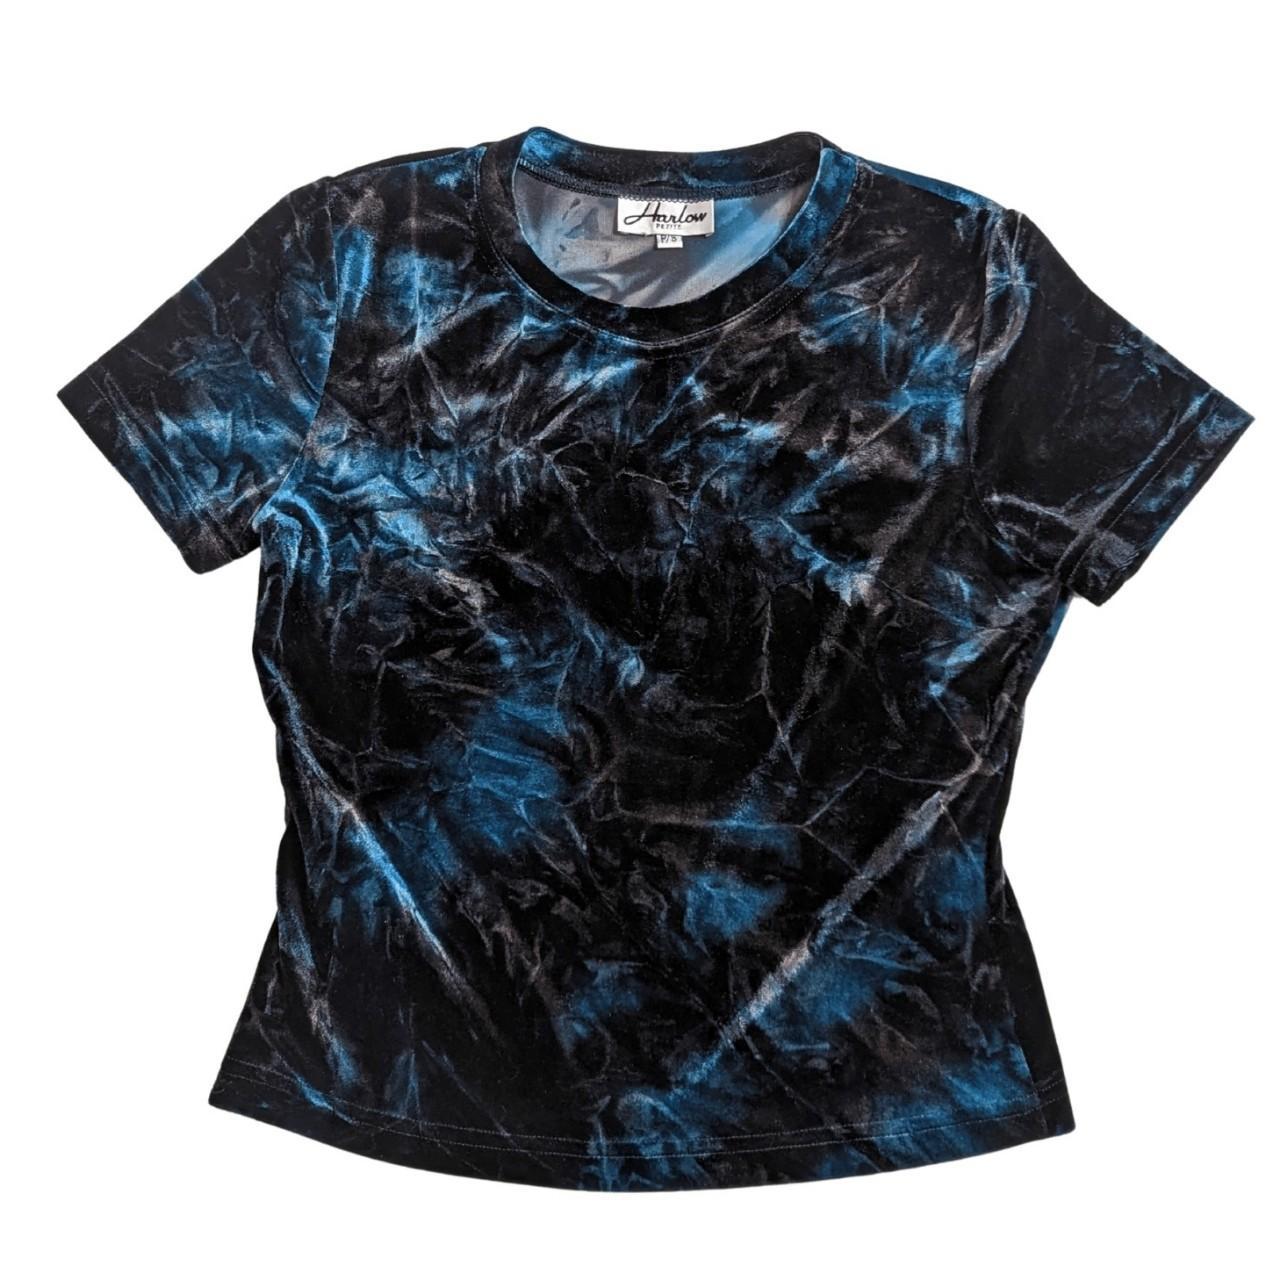 PJ Harlow Women's Black and Blue T-shirt